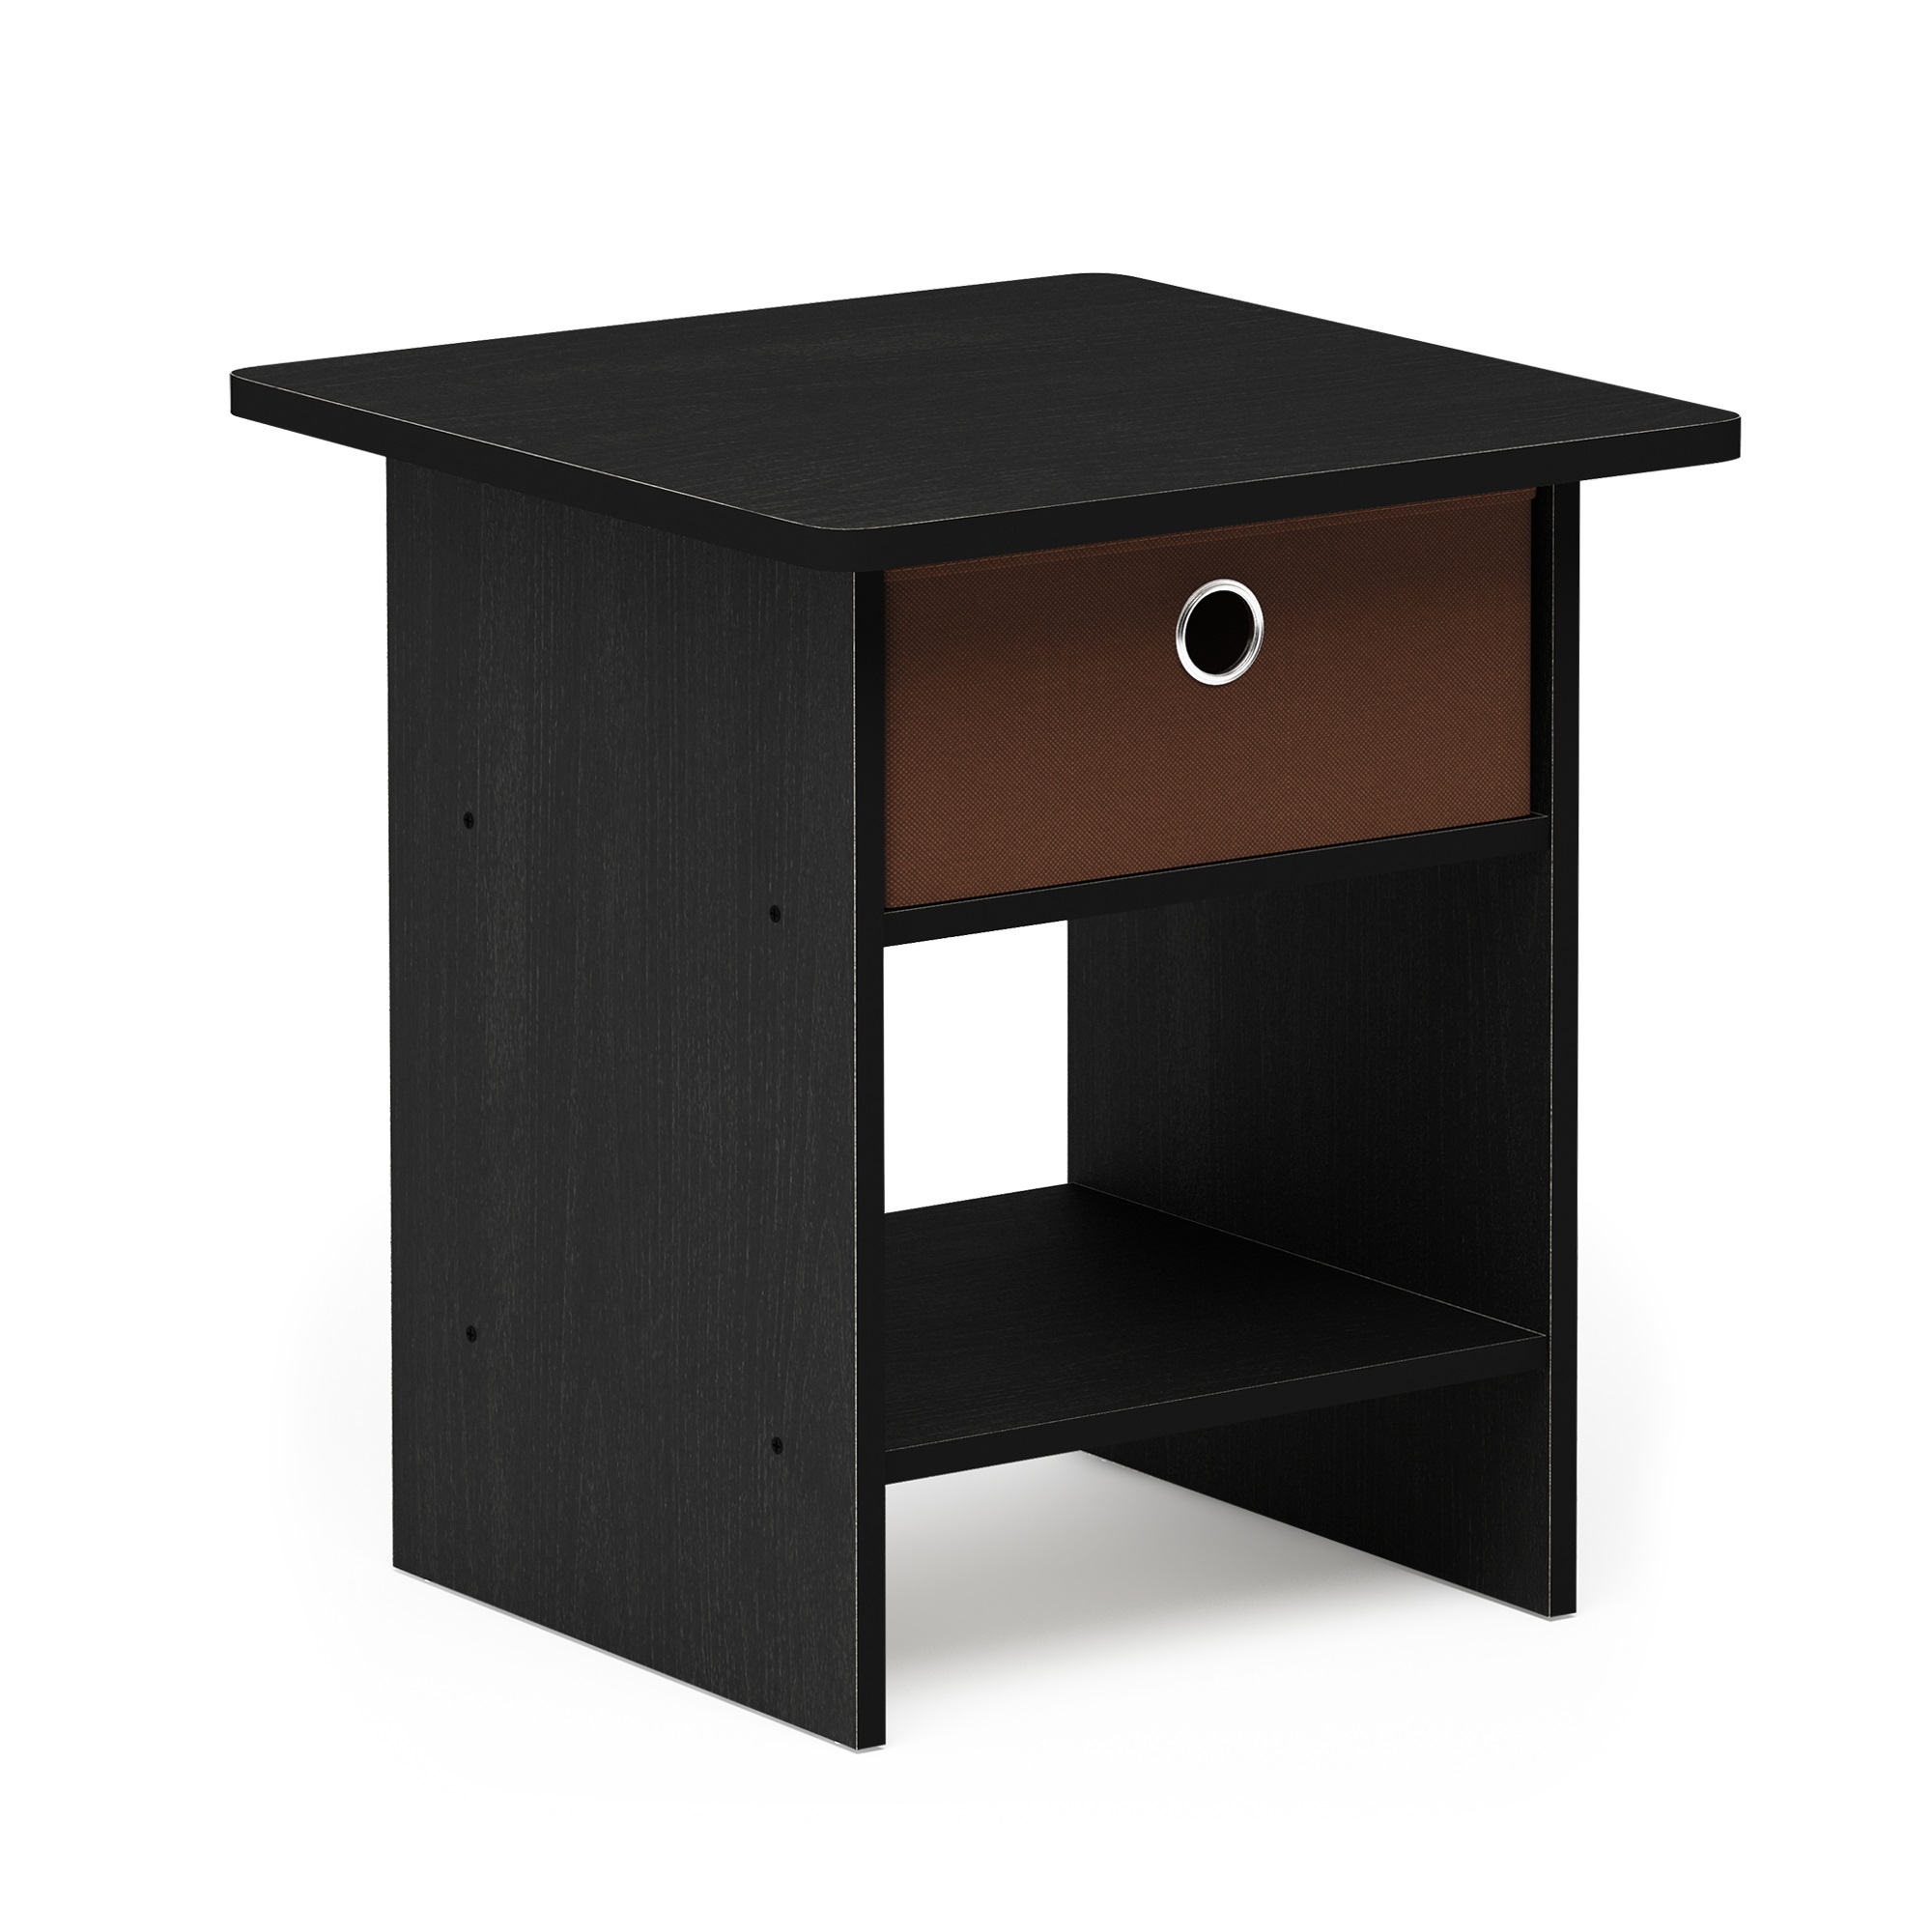 FURINNO Americano/Medium Brown End Table/Night Stand Storage Shelf With Bin Drawer